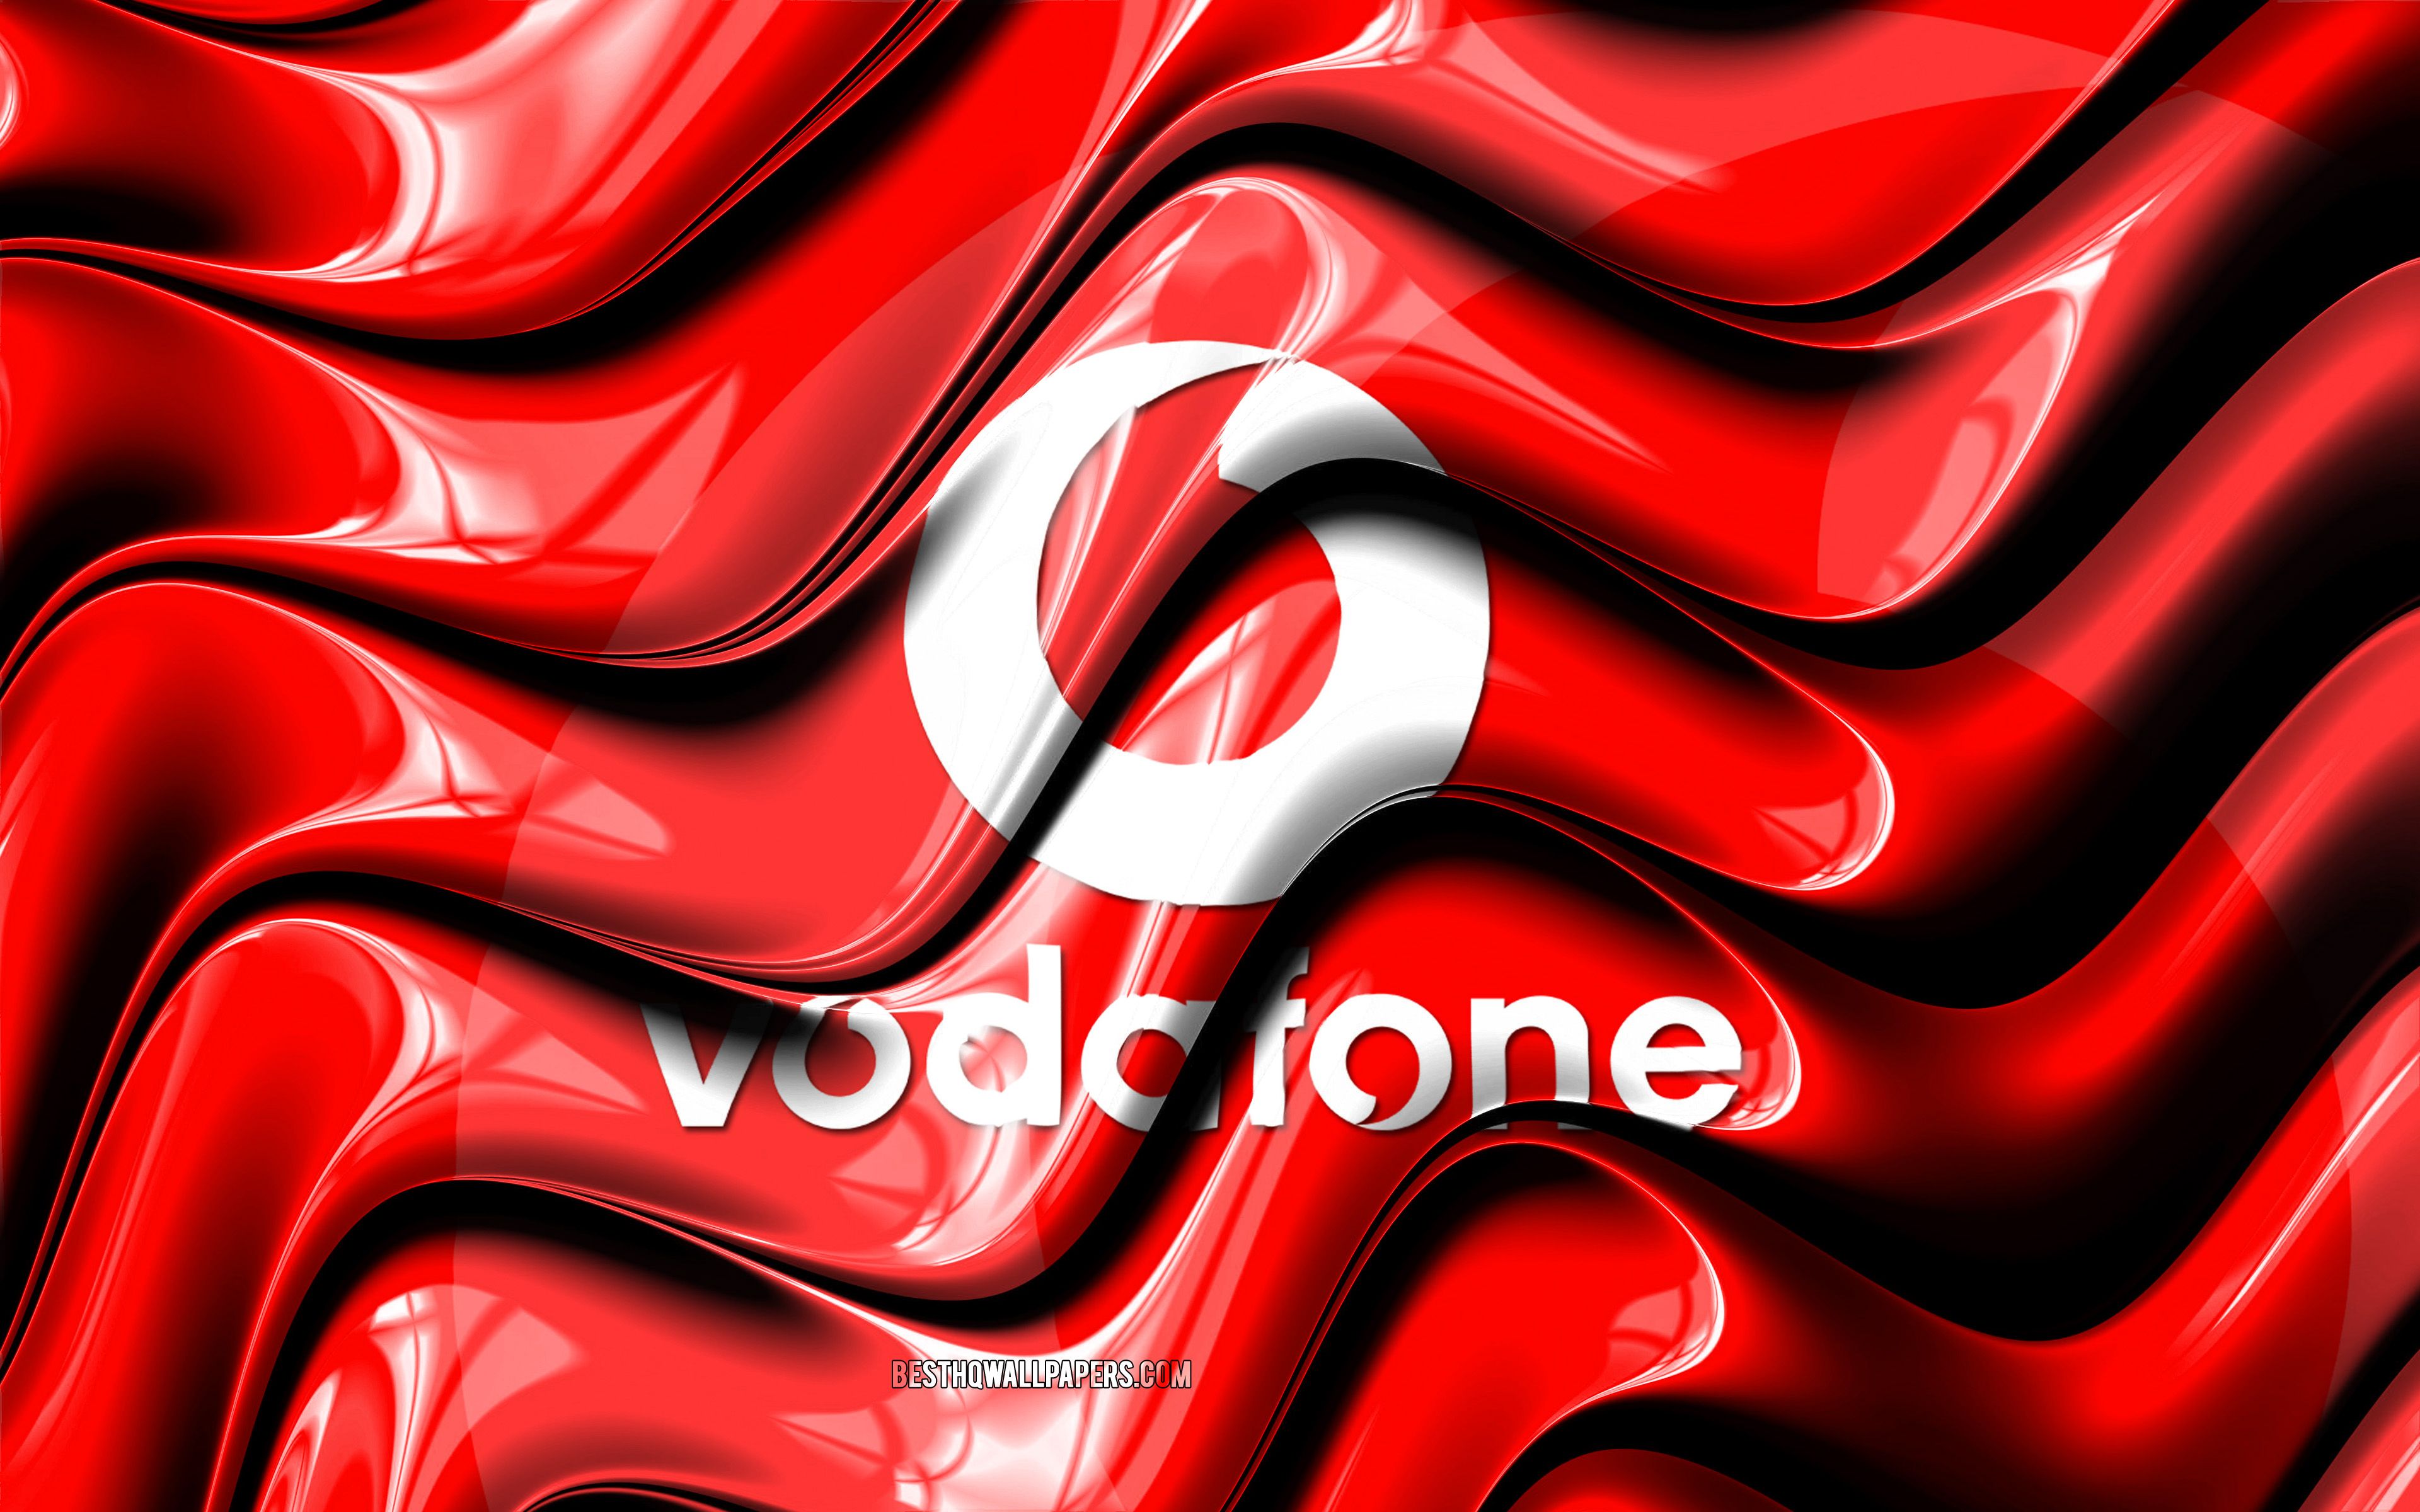 Download wallpaper Vodafone flag, 4k, red flag, Flag of Vodafone, 3D art, Vodafone, mobile operators, Vodafone Group, Vodafone 3D flag for desktop with resolution 3840x2400. High Quality HD picture wallpaper